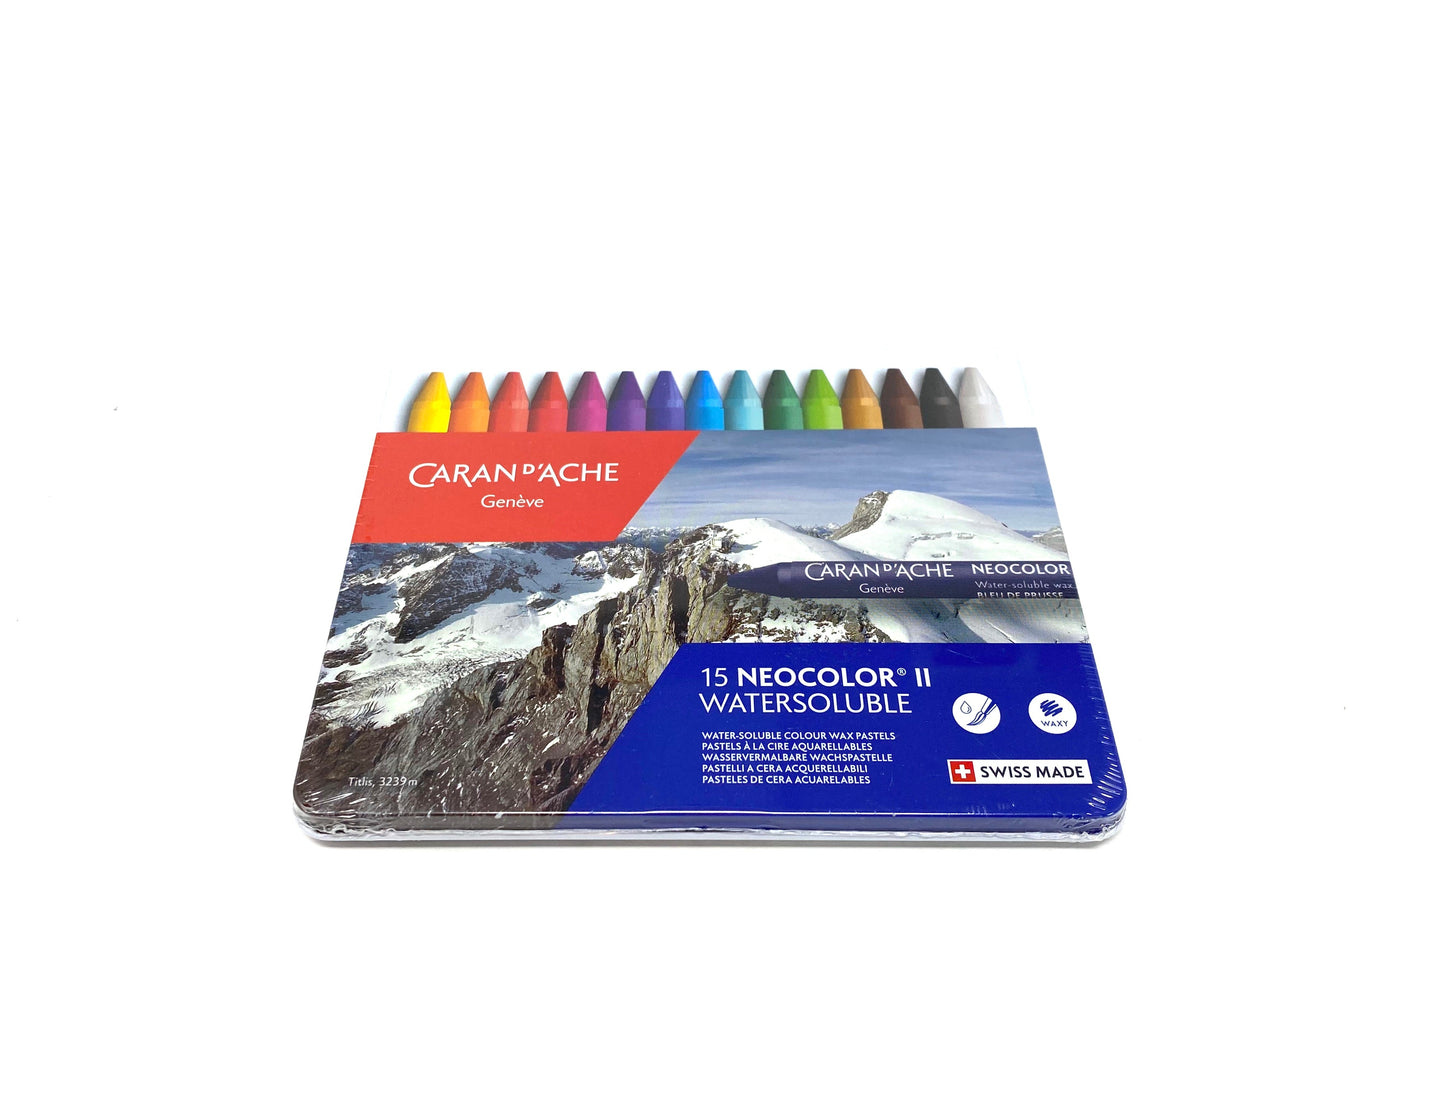 Caran D'Ache Neocolor II Water-soluble Wax Pastel Crayon